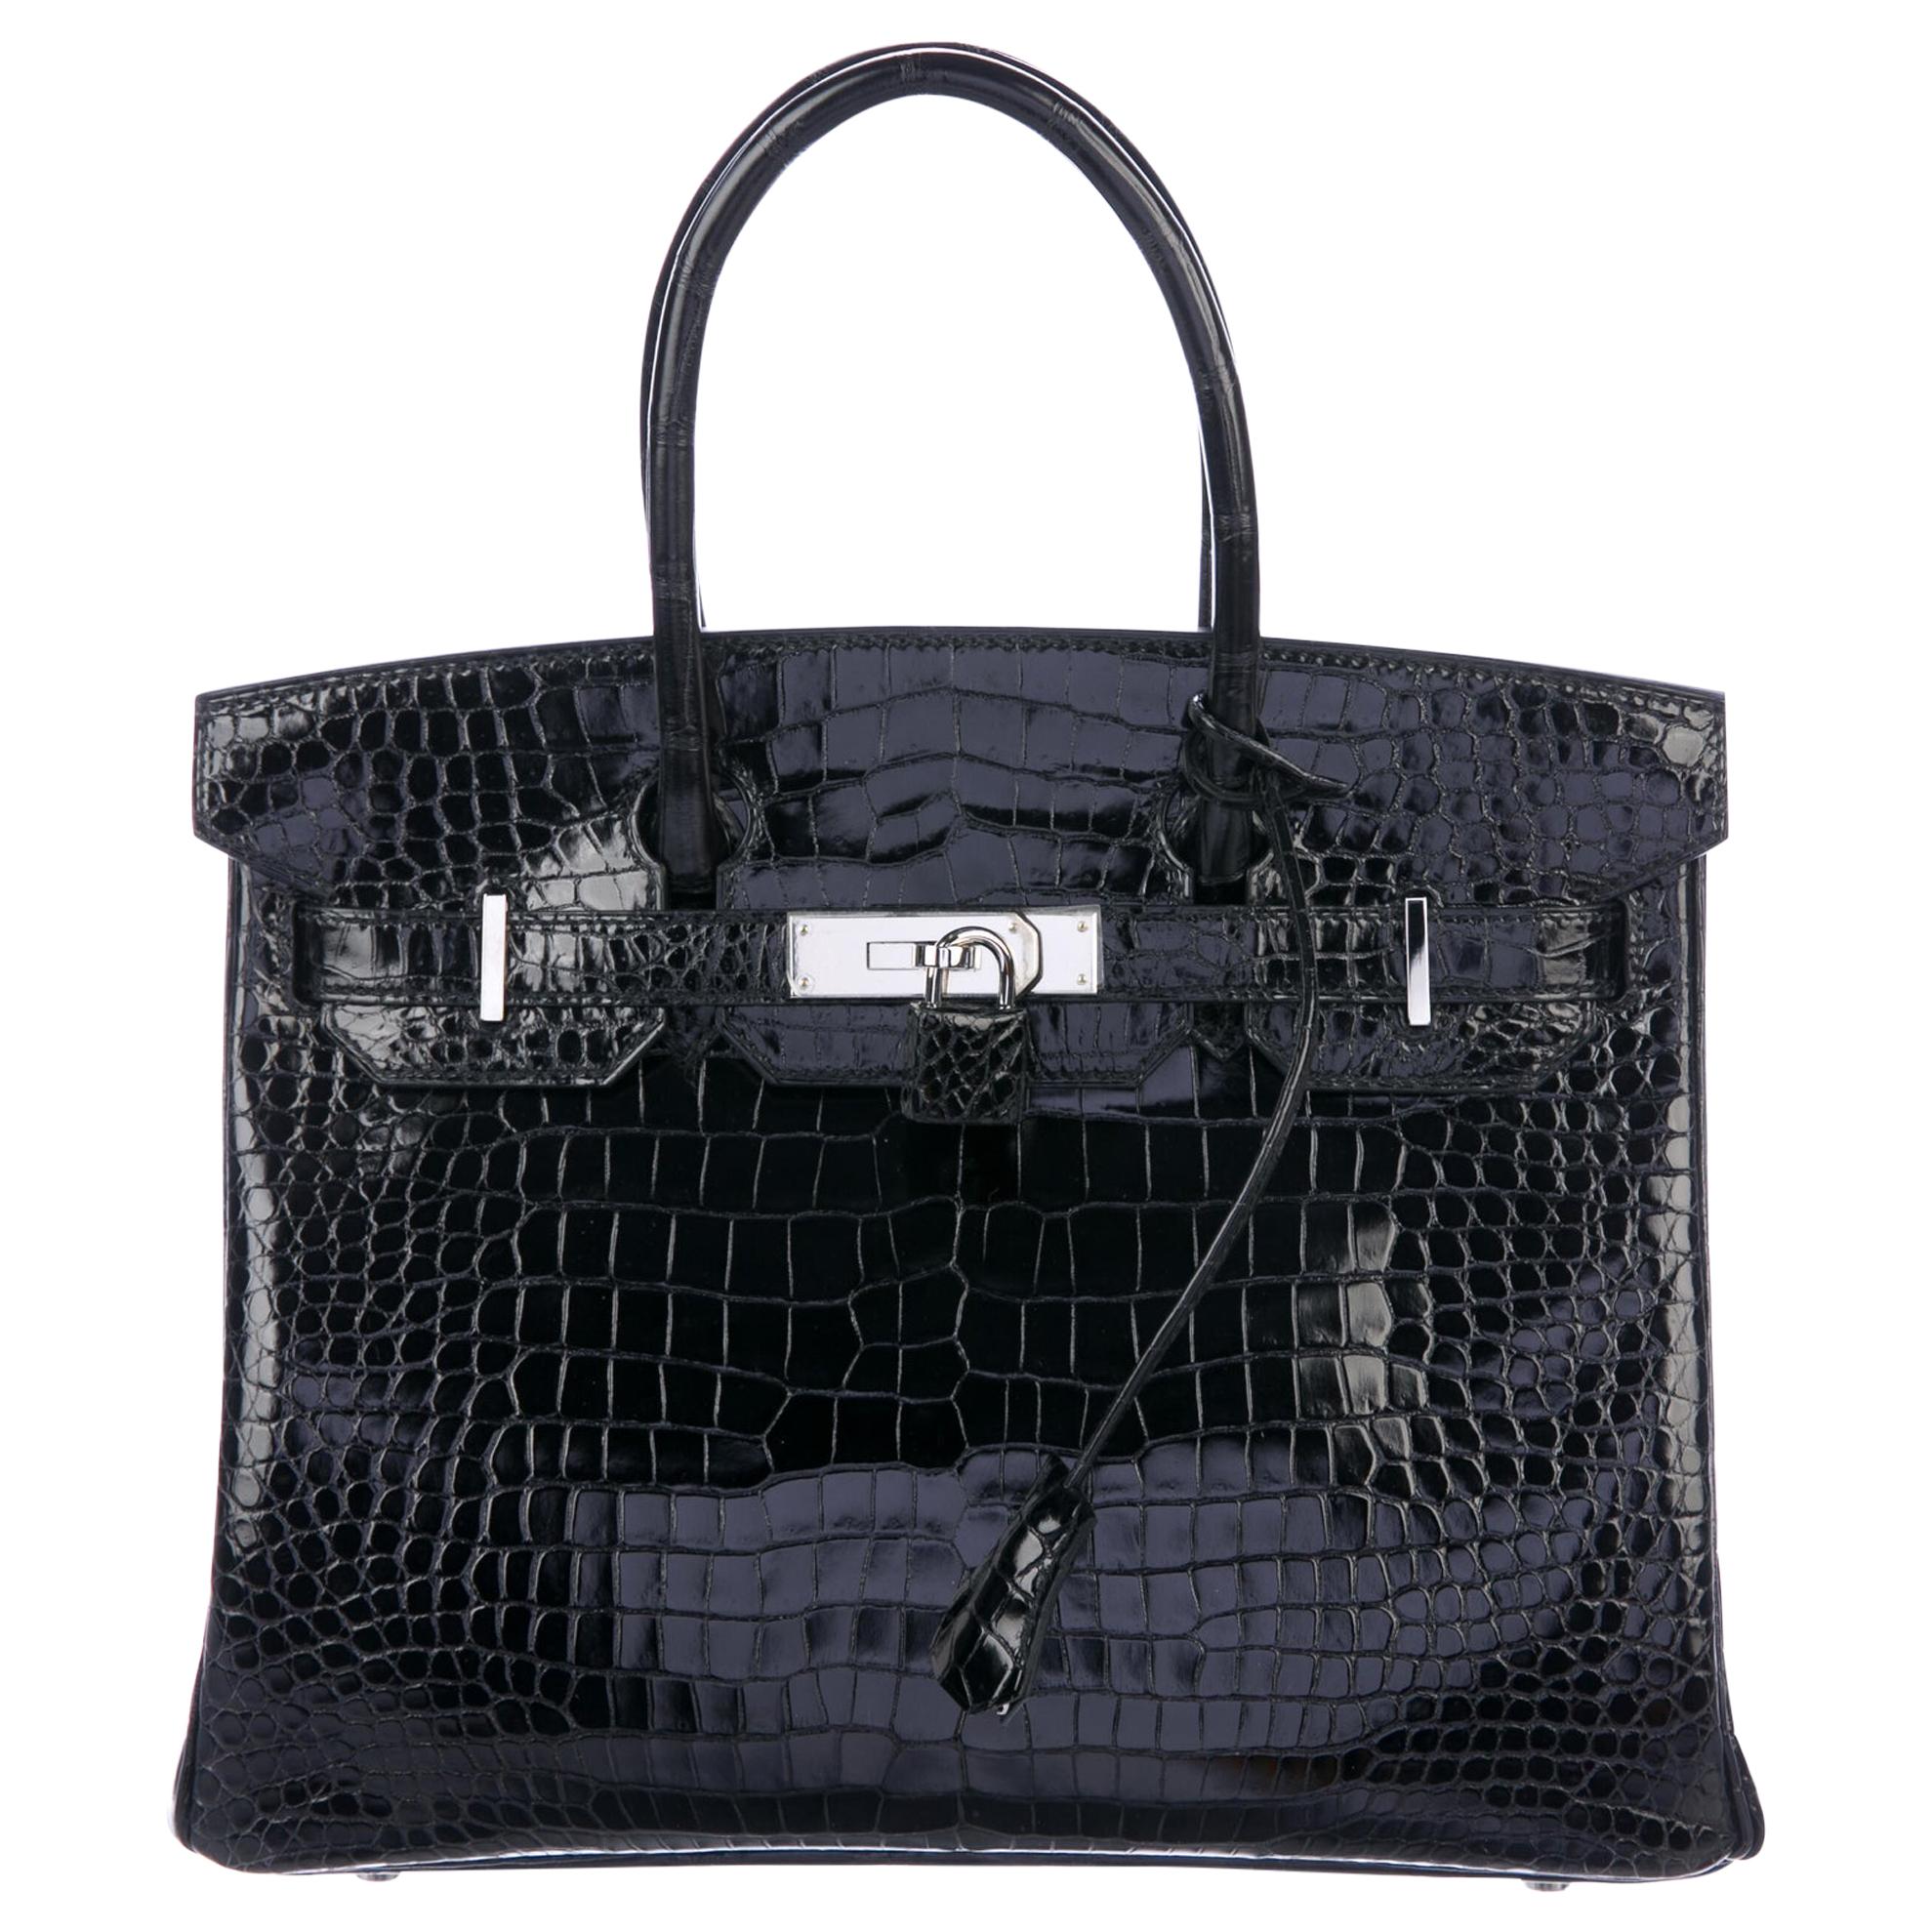 Hermes Birkin 30 Black Shiny Crocodile Top Handle Satchel Tote Bag in Box